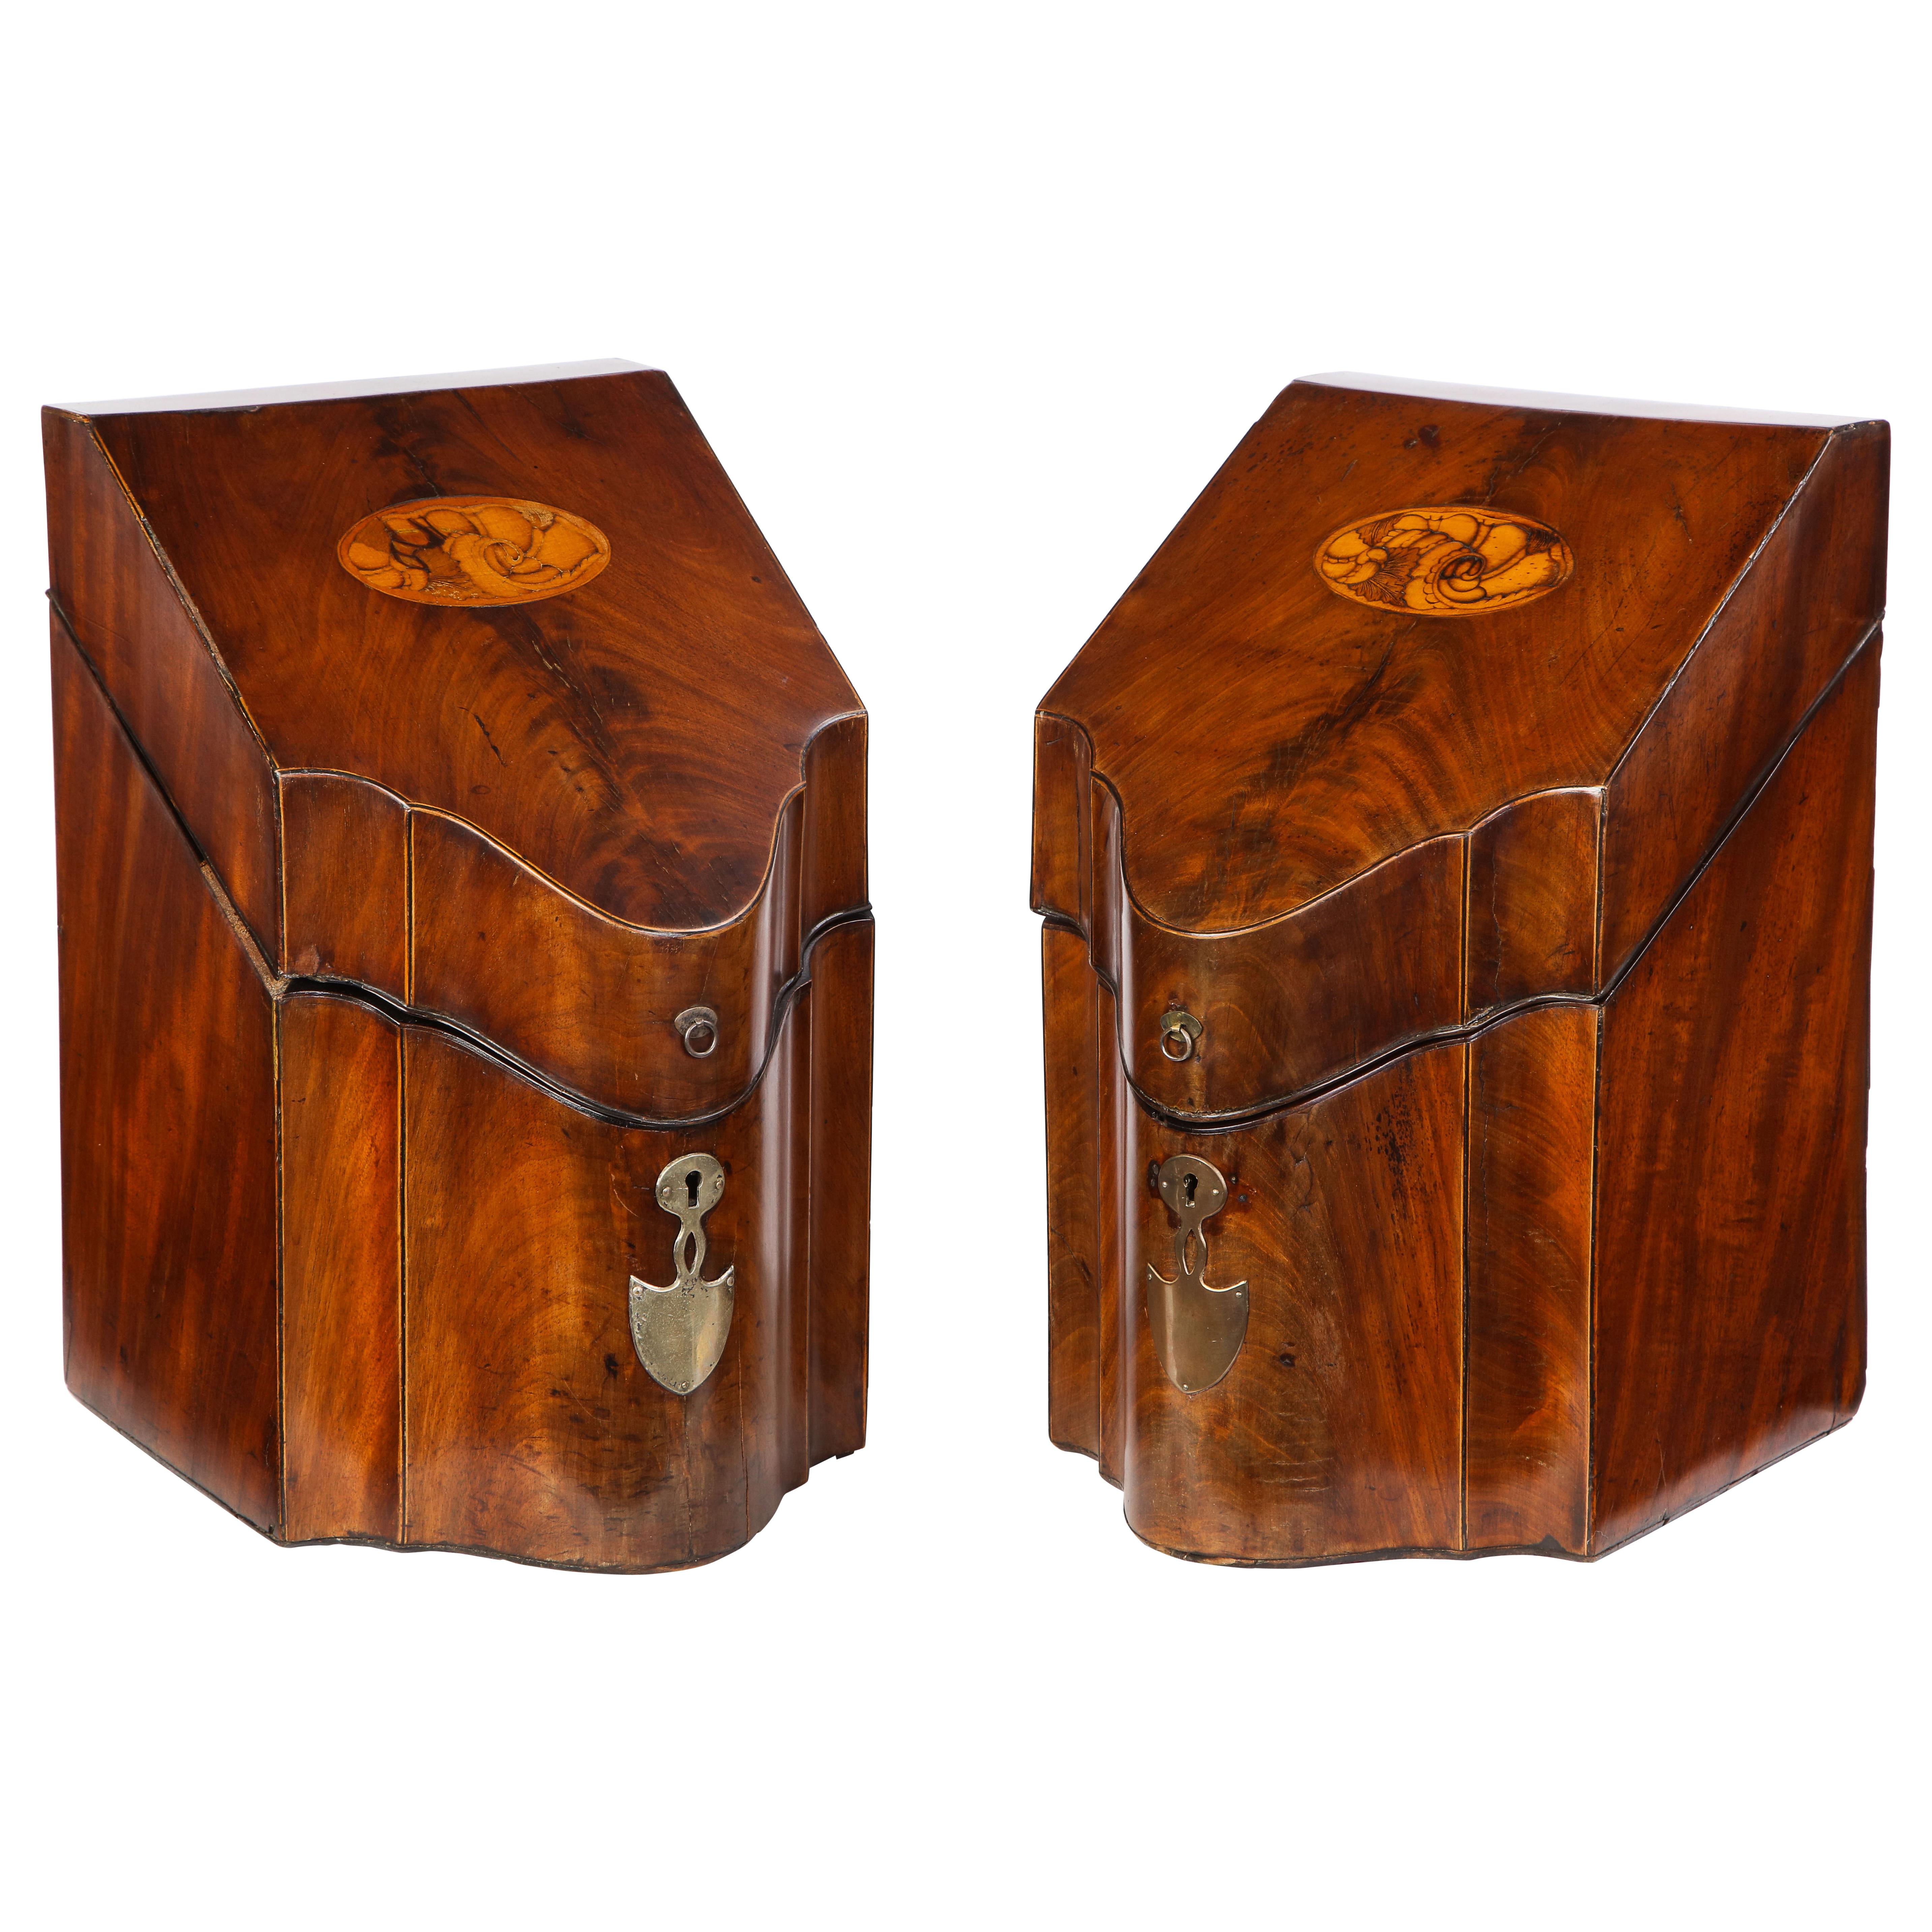 Pair of George III Inlaid Satinwood Cutlery Boxes, Late 18th Century